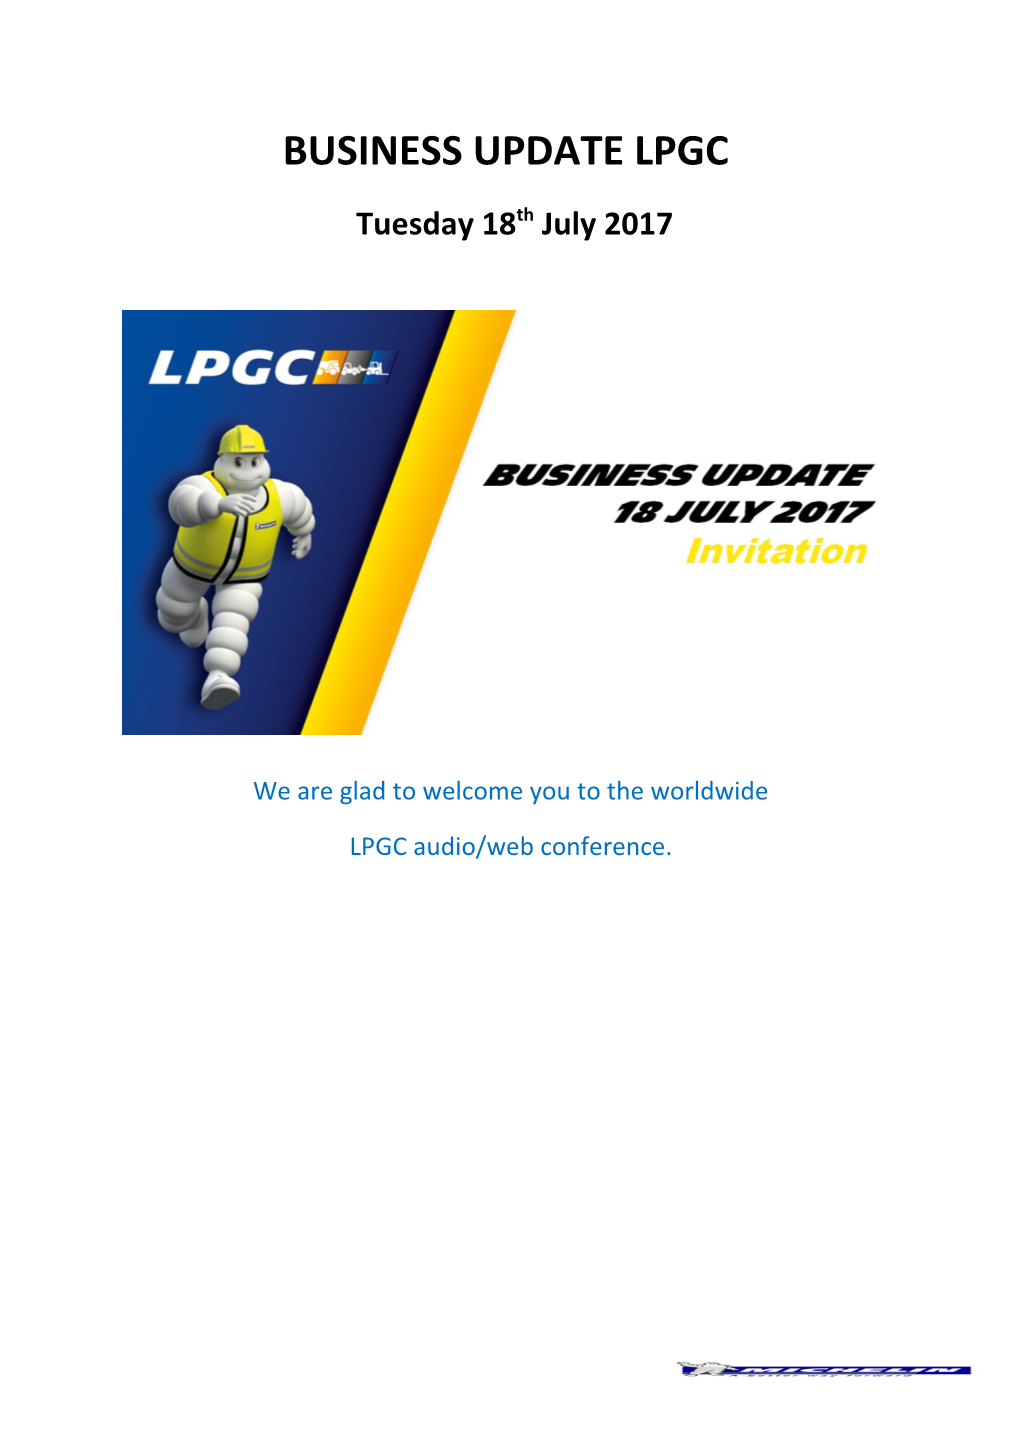 Business Update Lpgc